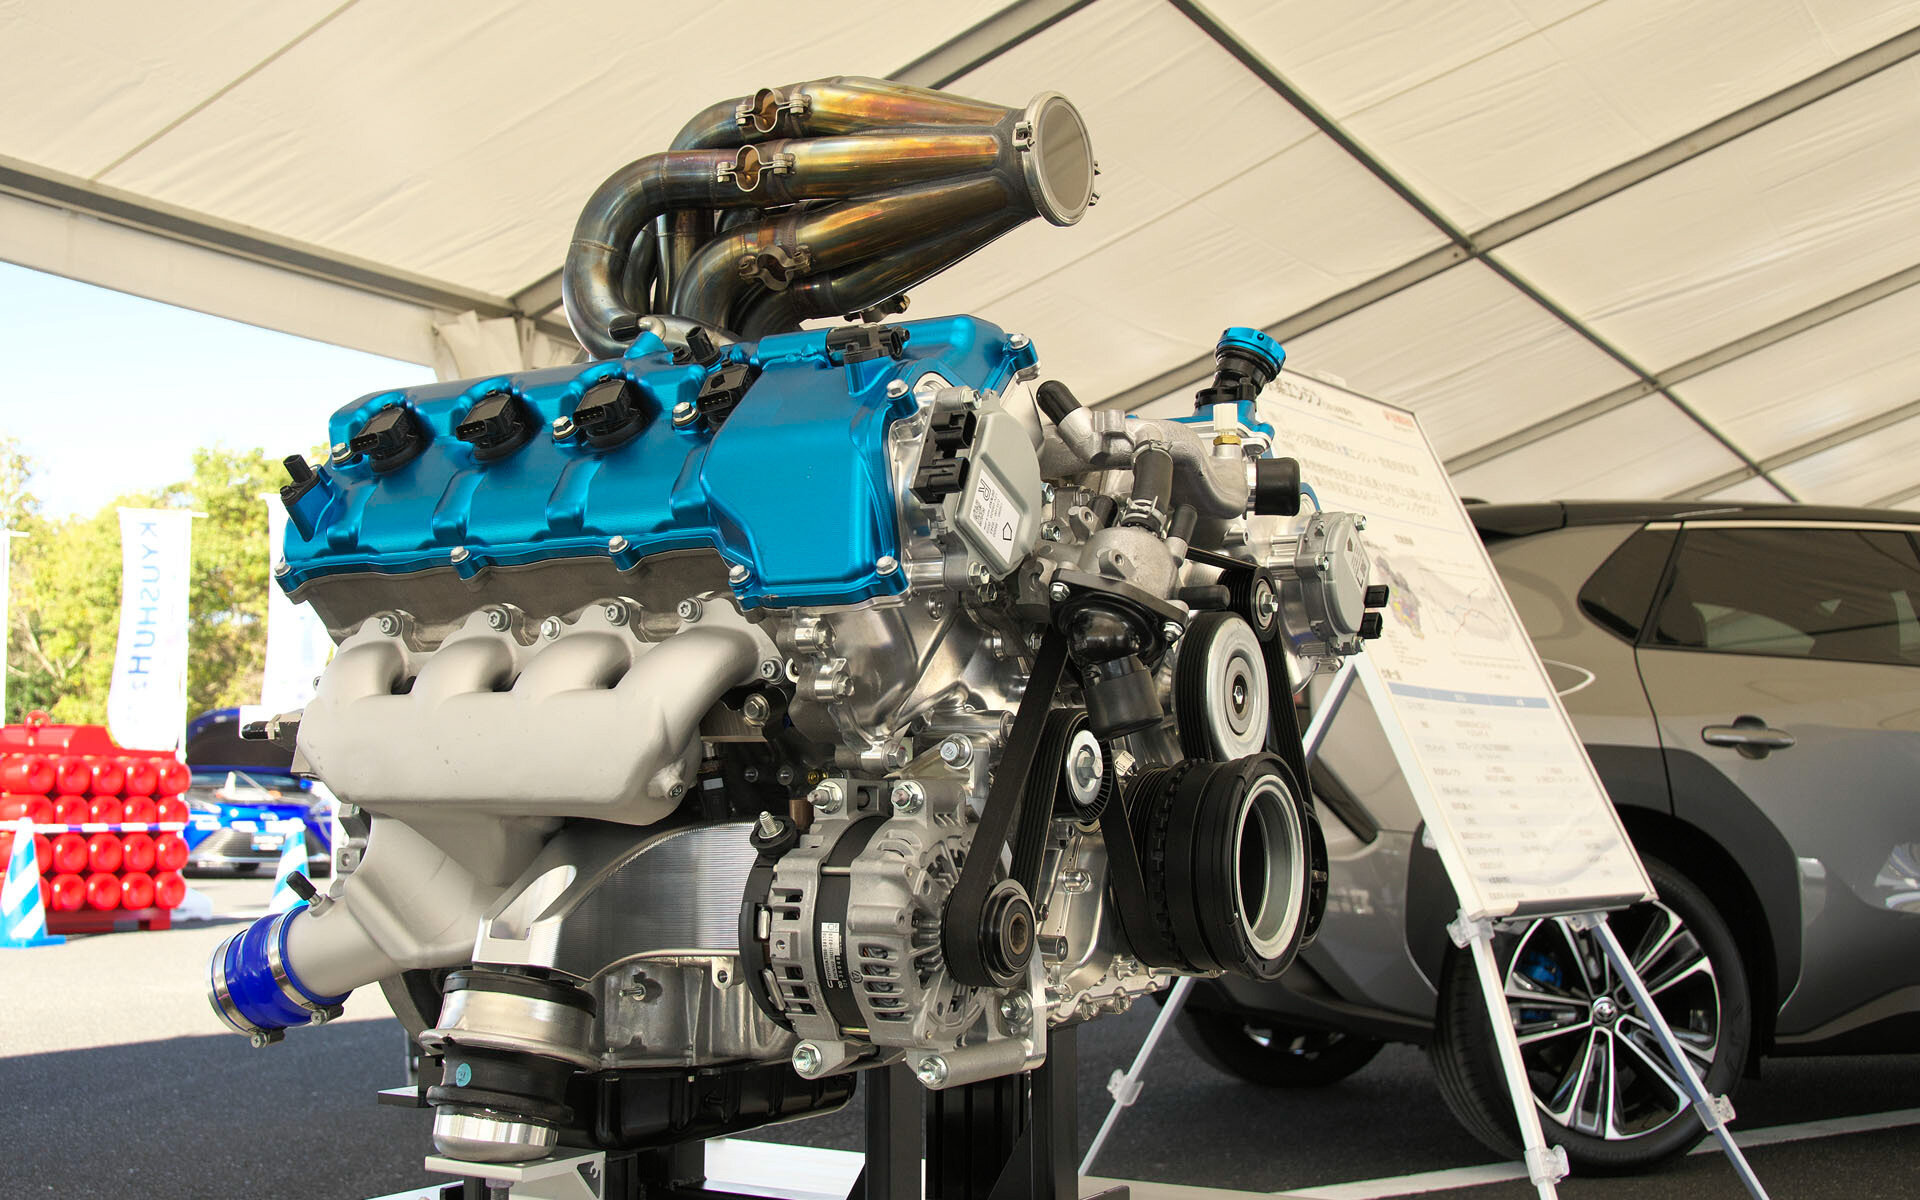 Yamaha unveils hydrogen V8 - Engine, Hydrogen engine, Yamaha, Toyota, news, Dromru, Longpost